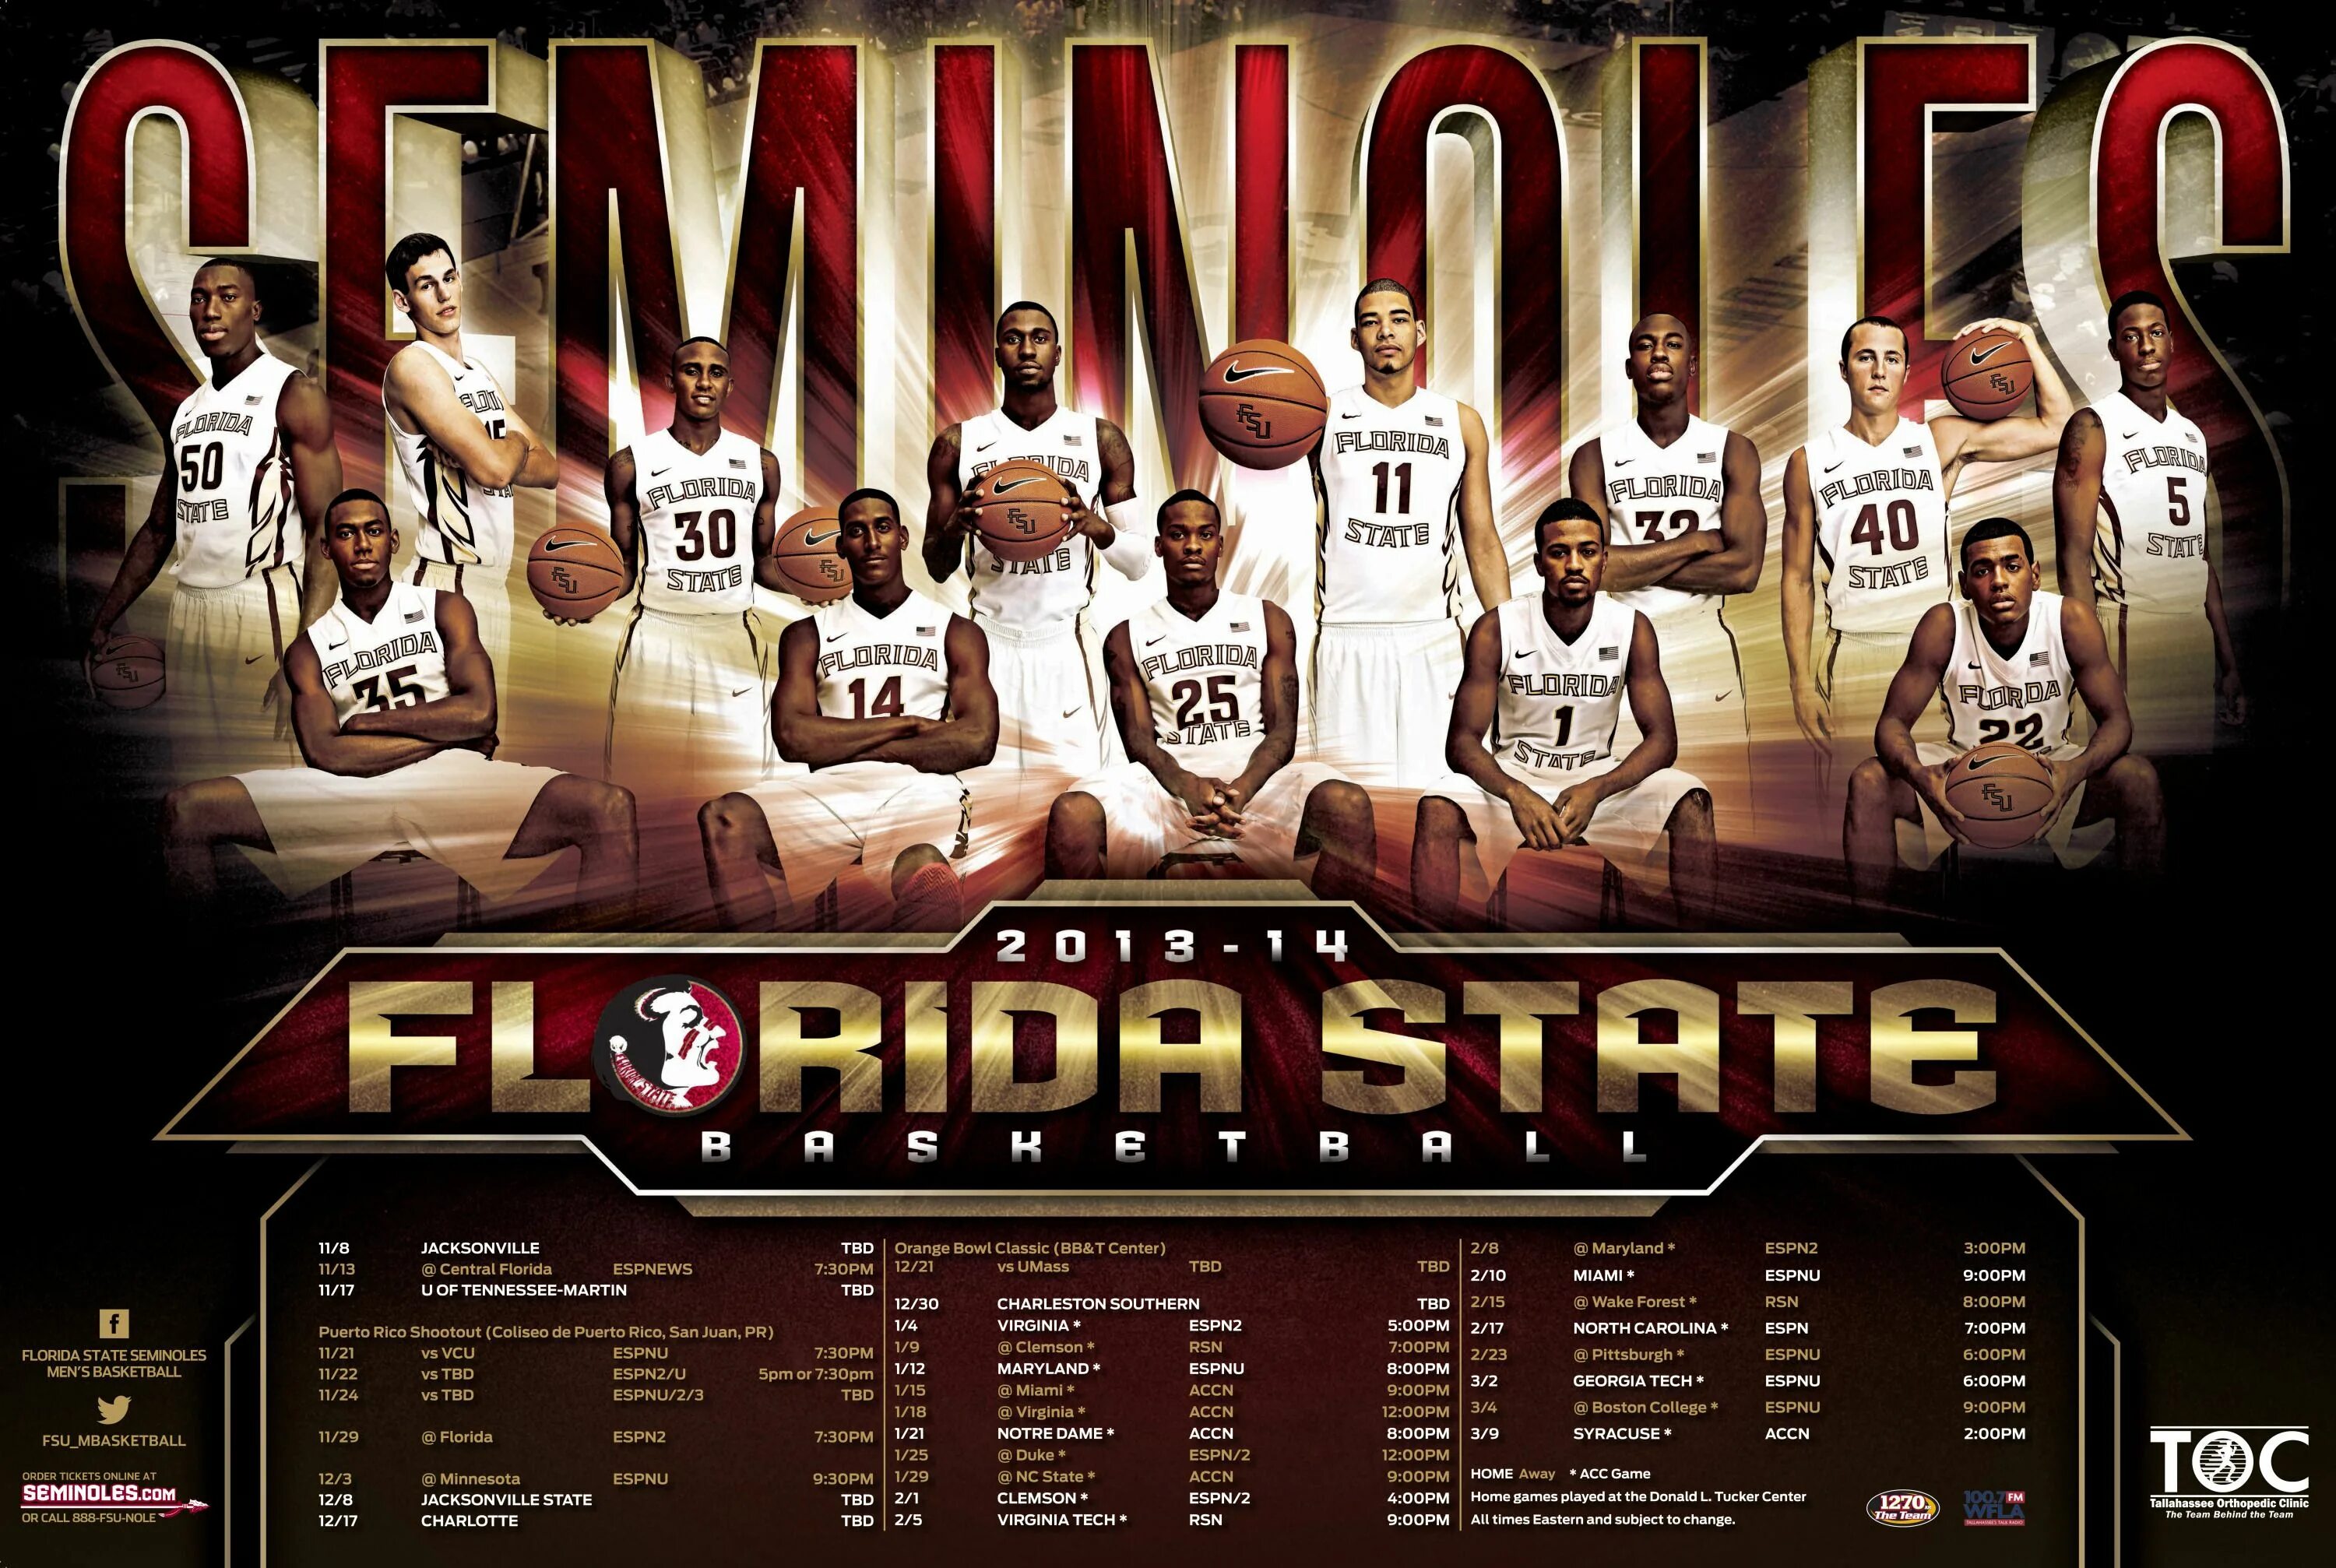 Good theme. Плакат для баскетбольной команды. Постеры баскетбол набор команд. Плакат баскетбол команда мира. Сделать плакат команды баскетбола.